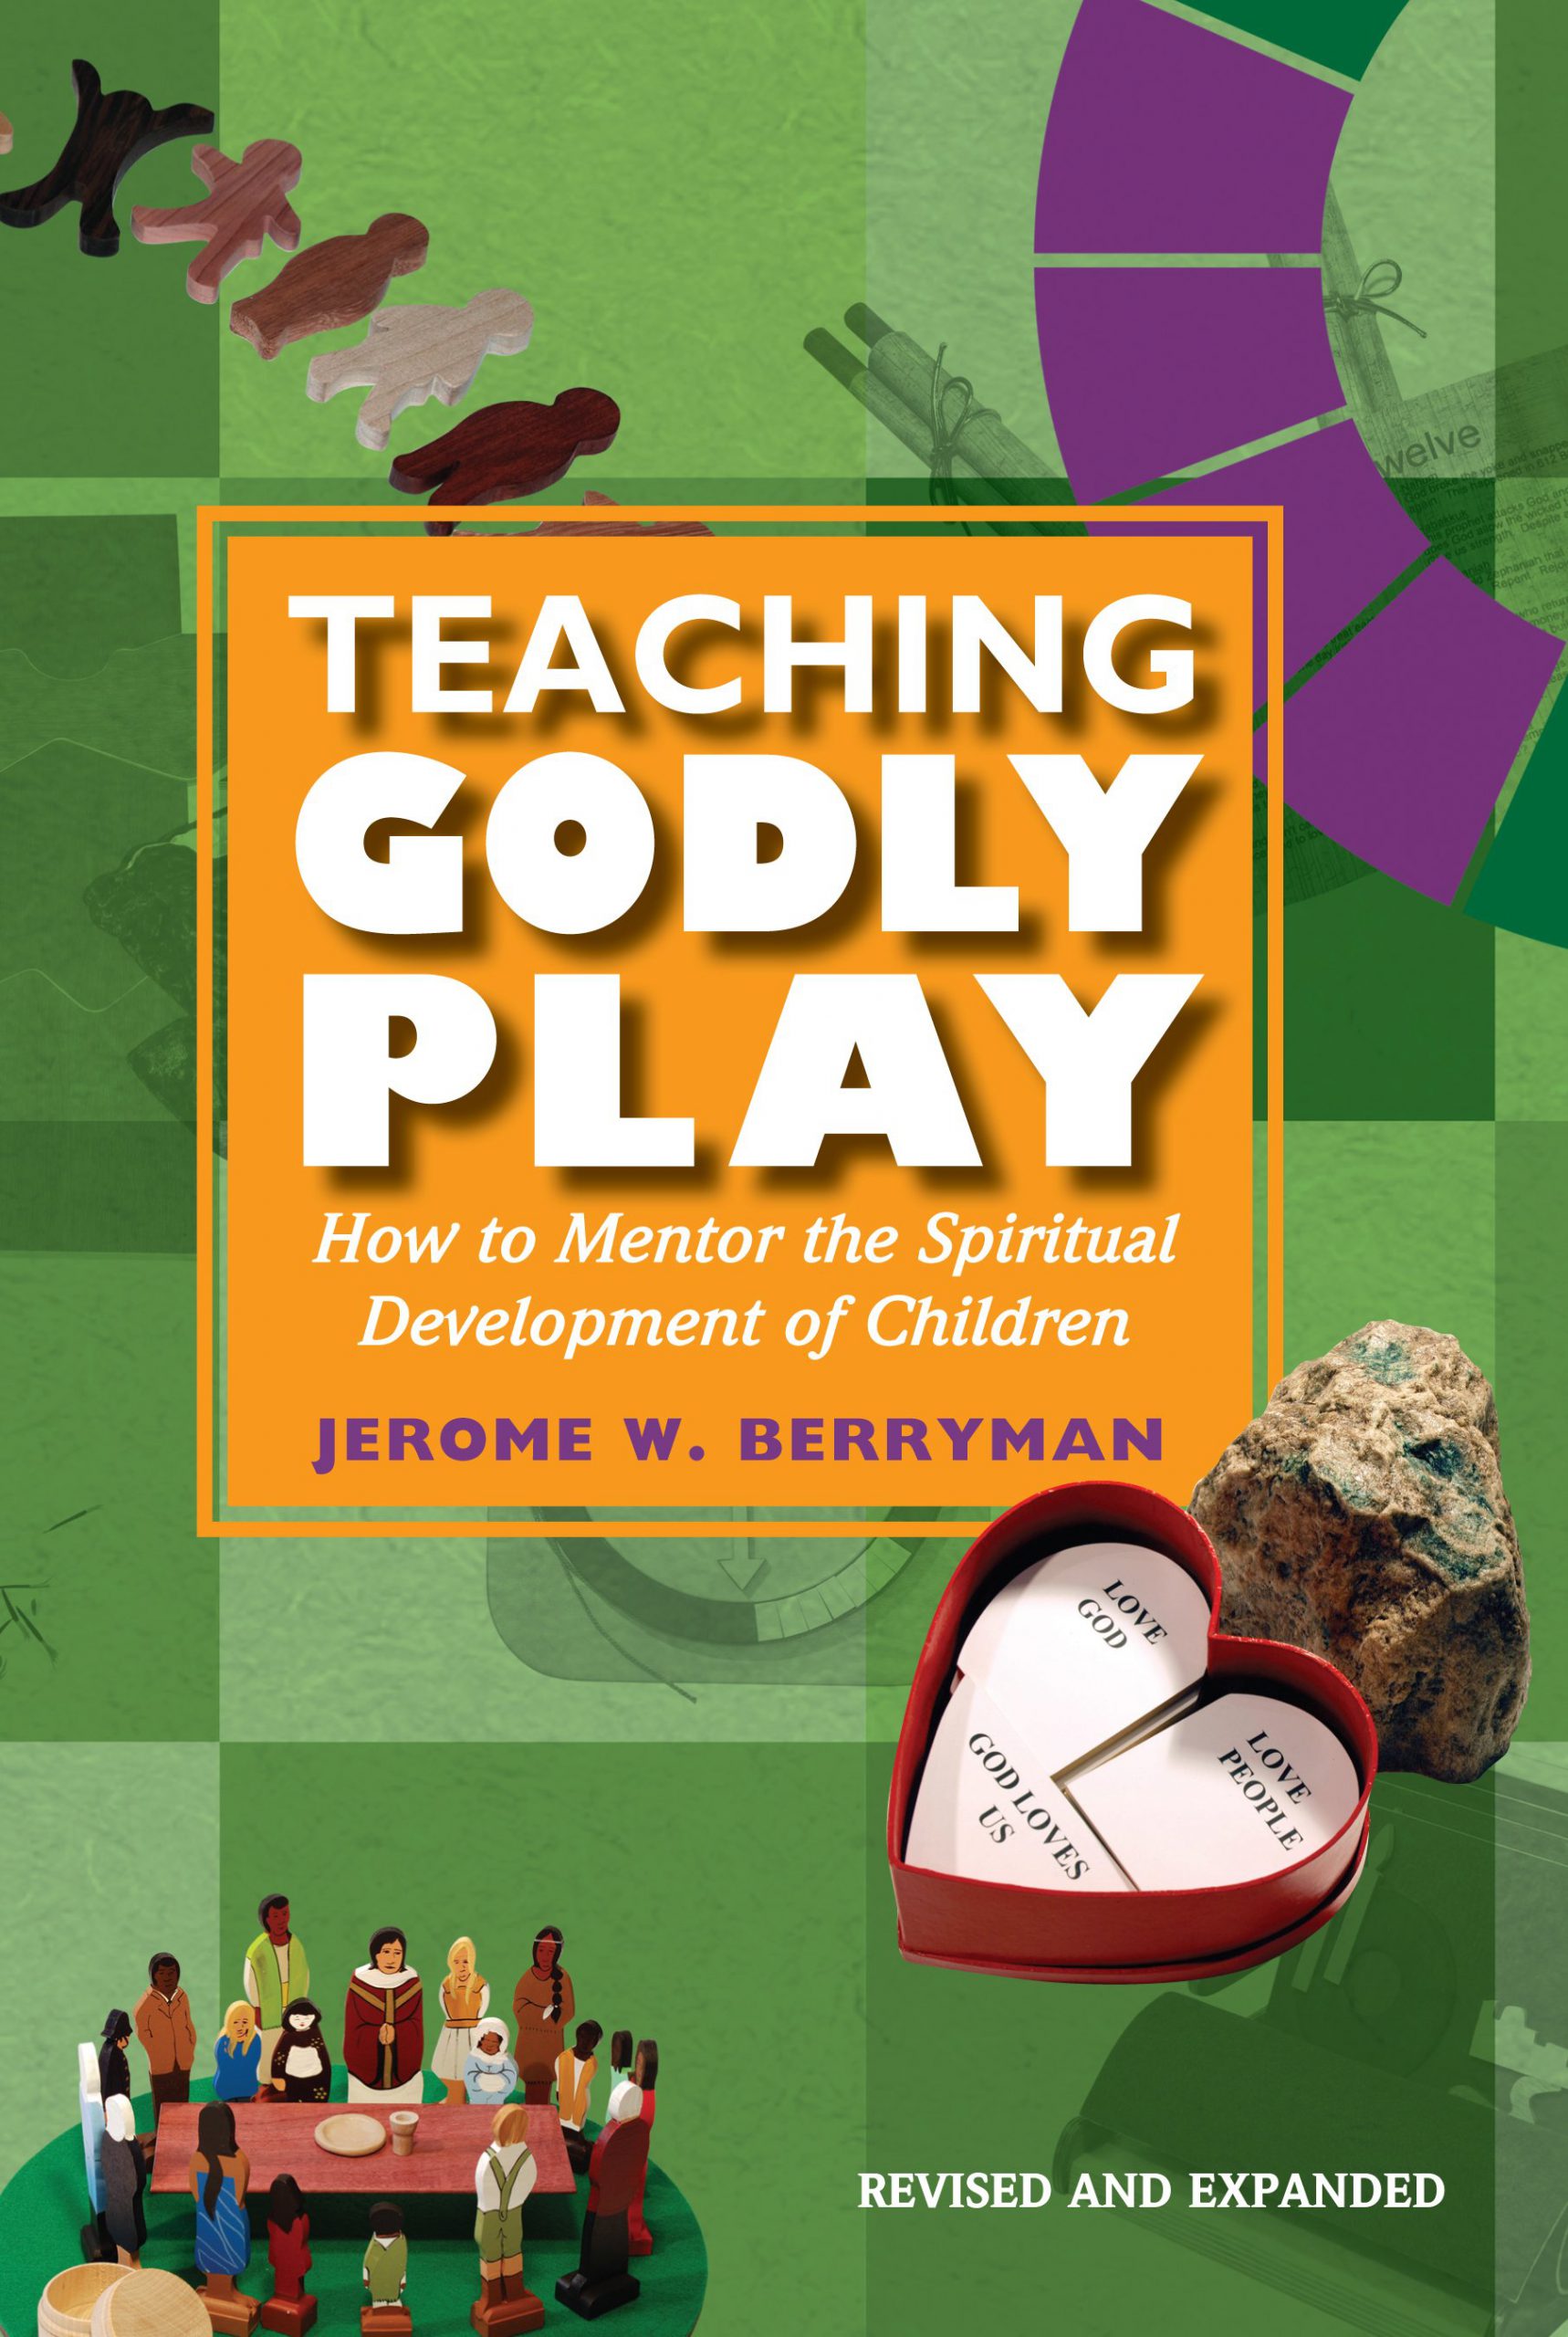 Teaching Godly Play: How to mentor the spiritual development of children